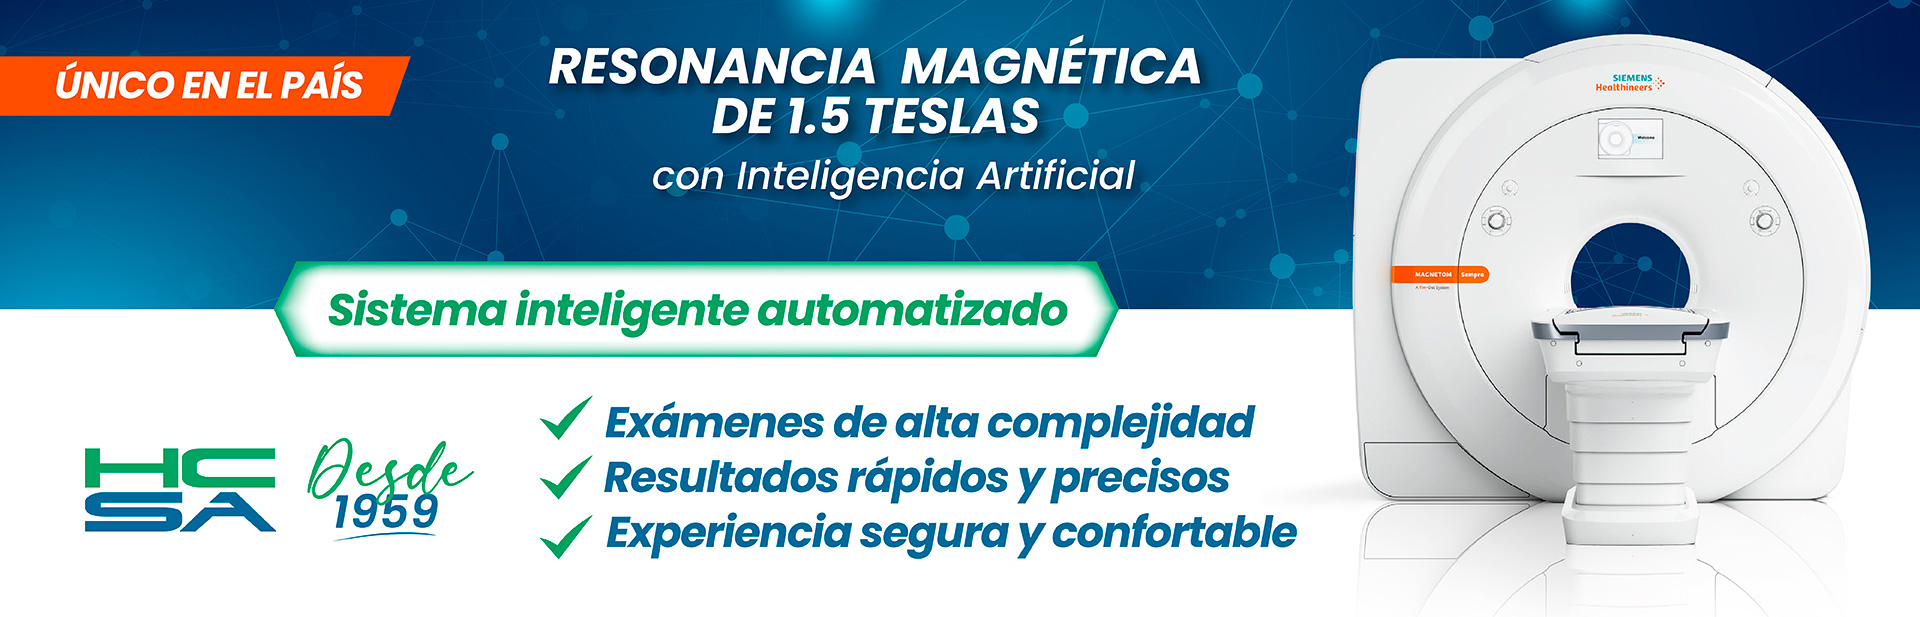 Resonancia Magnética de 1.5 Teslas con inteligencia artificial | Hospital Clínica San Agustín